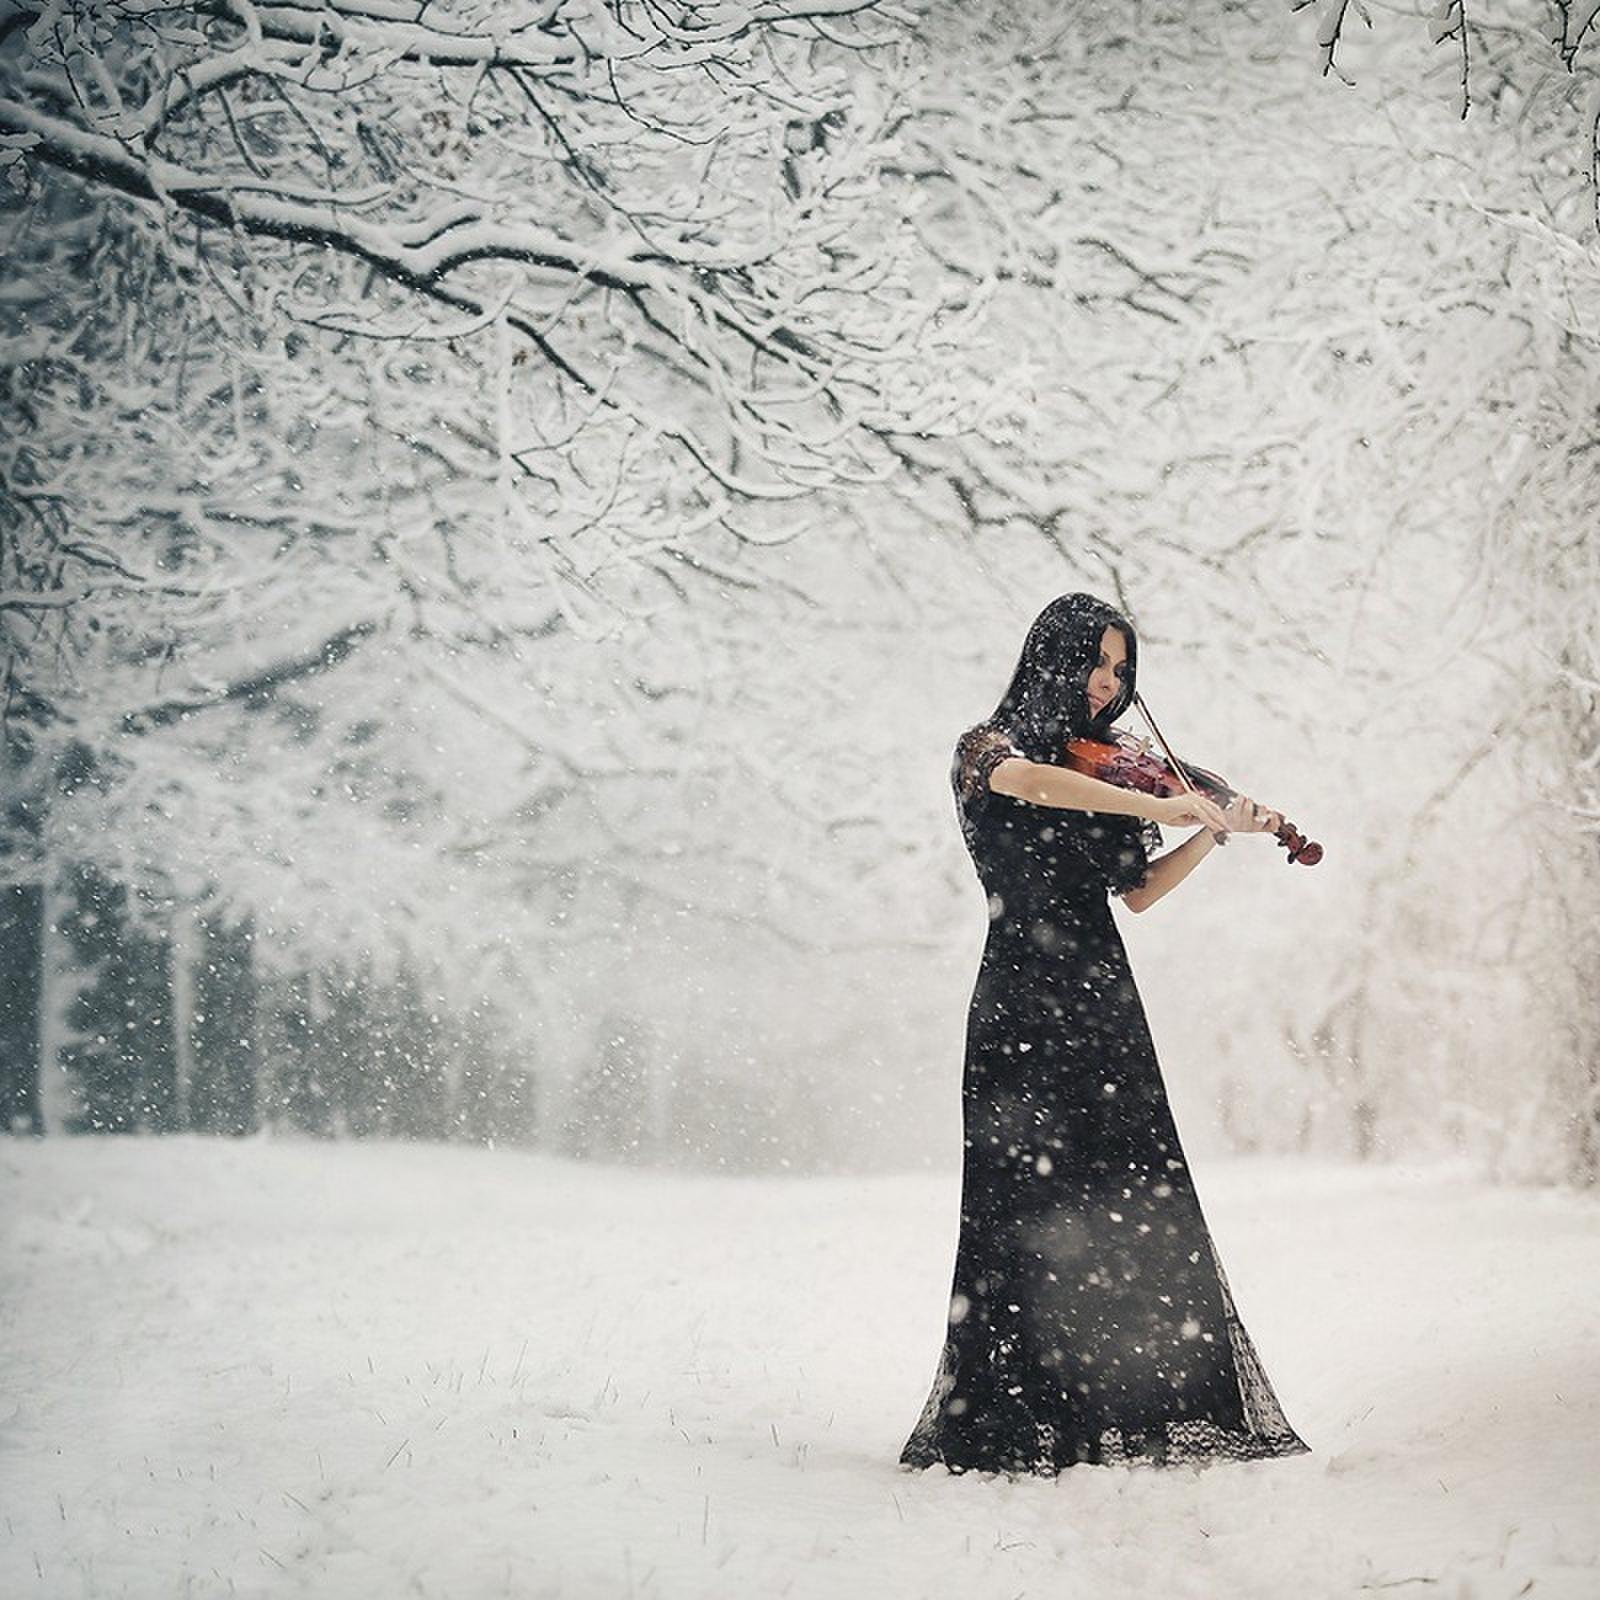 Девушка под снегом. Женщина и снег. Девушка на зимнем пейзаже. Девушка и снегопад.